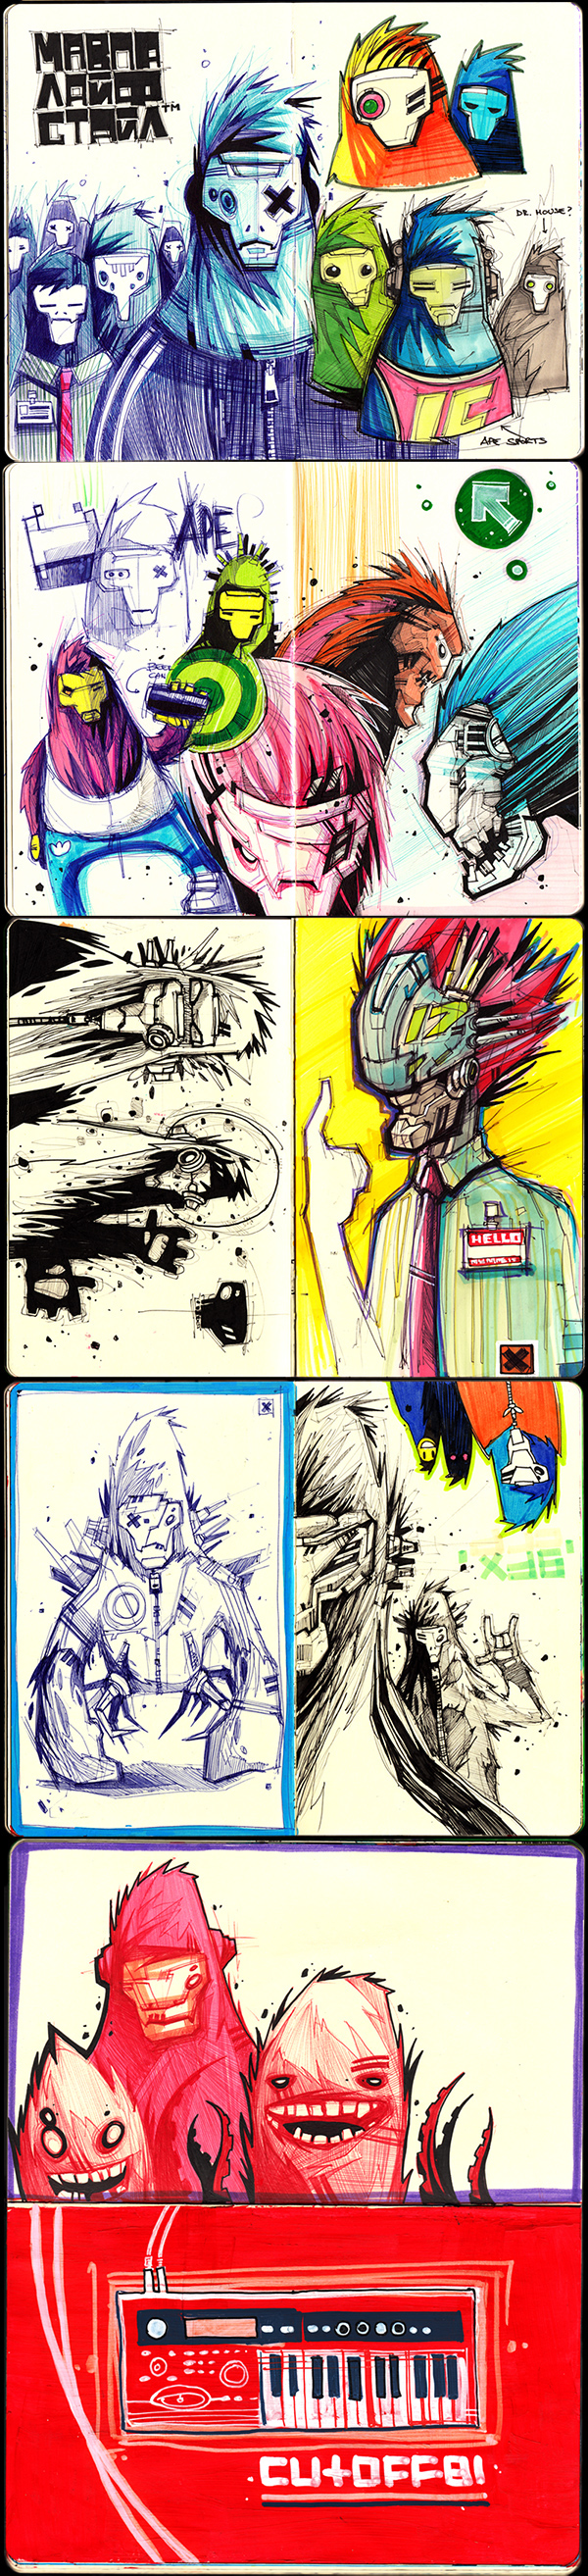 sketch book moleskine pen markers sketchbook robot Character chaos Comix doodles linear art ballpoint